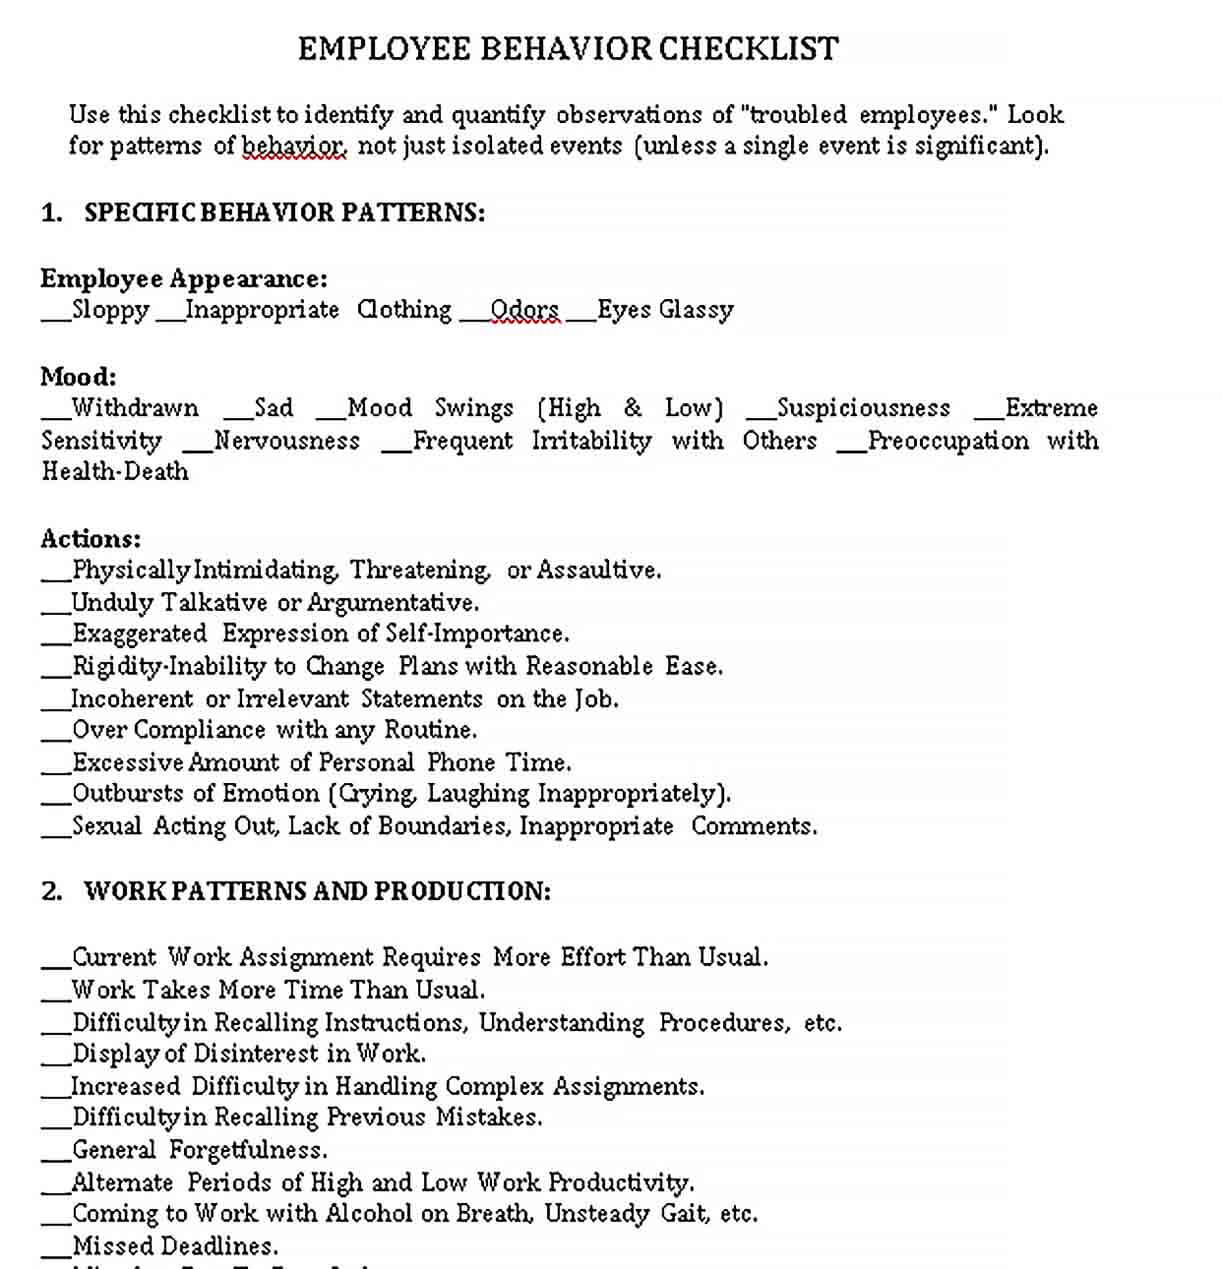 Sample Employee Behavior Checklist